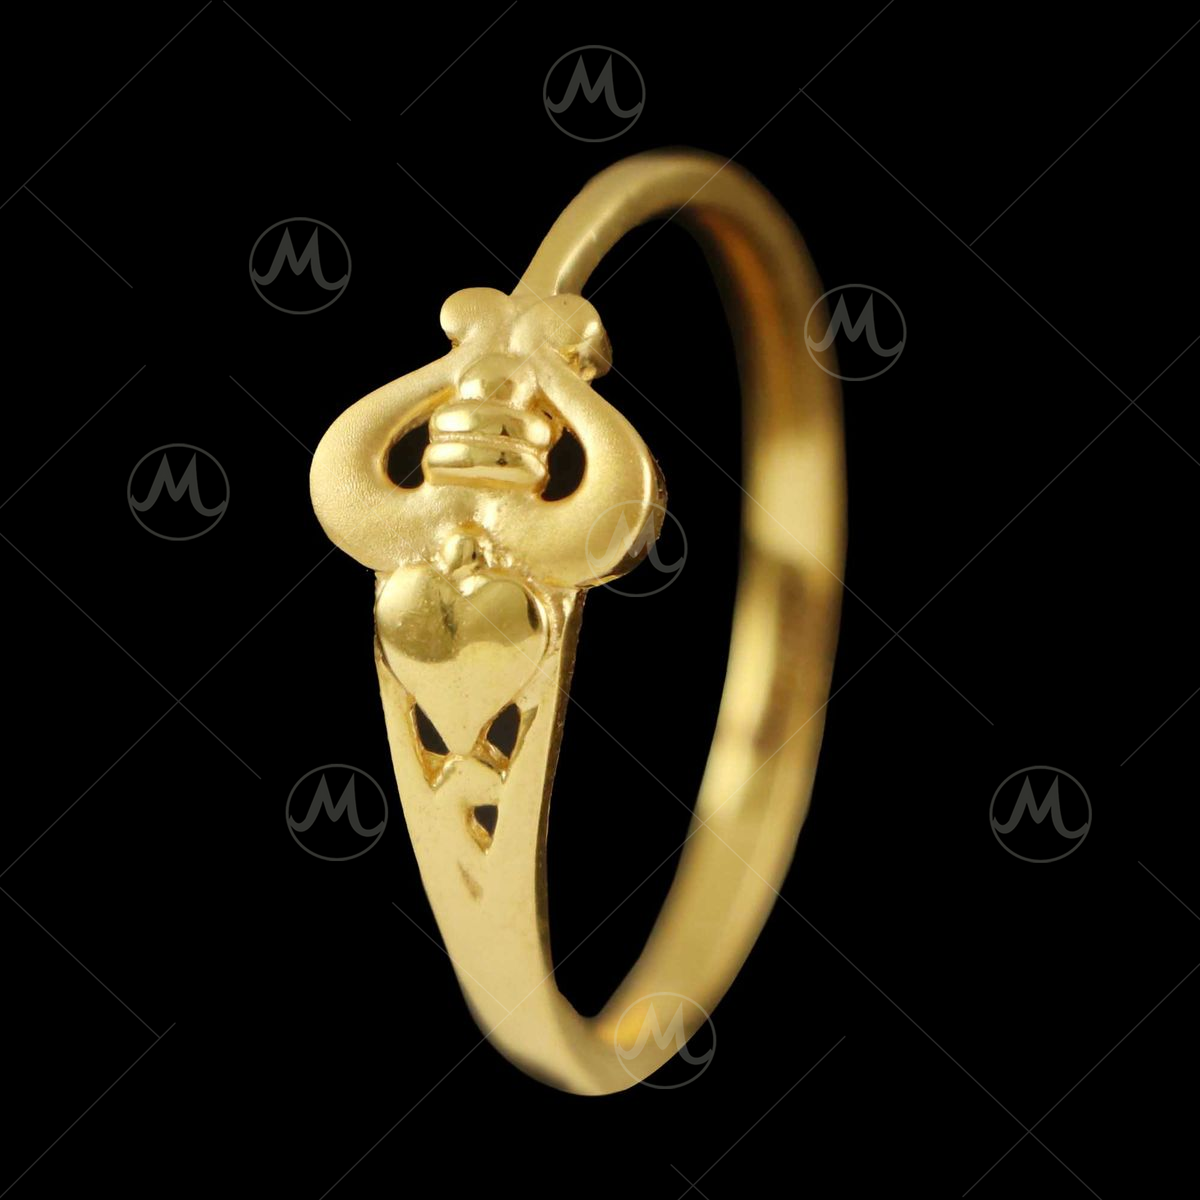 Gold ring | Gold rings, 22k gold ring, Rings